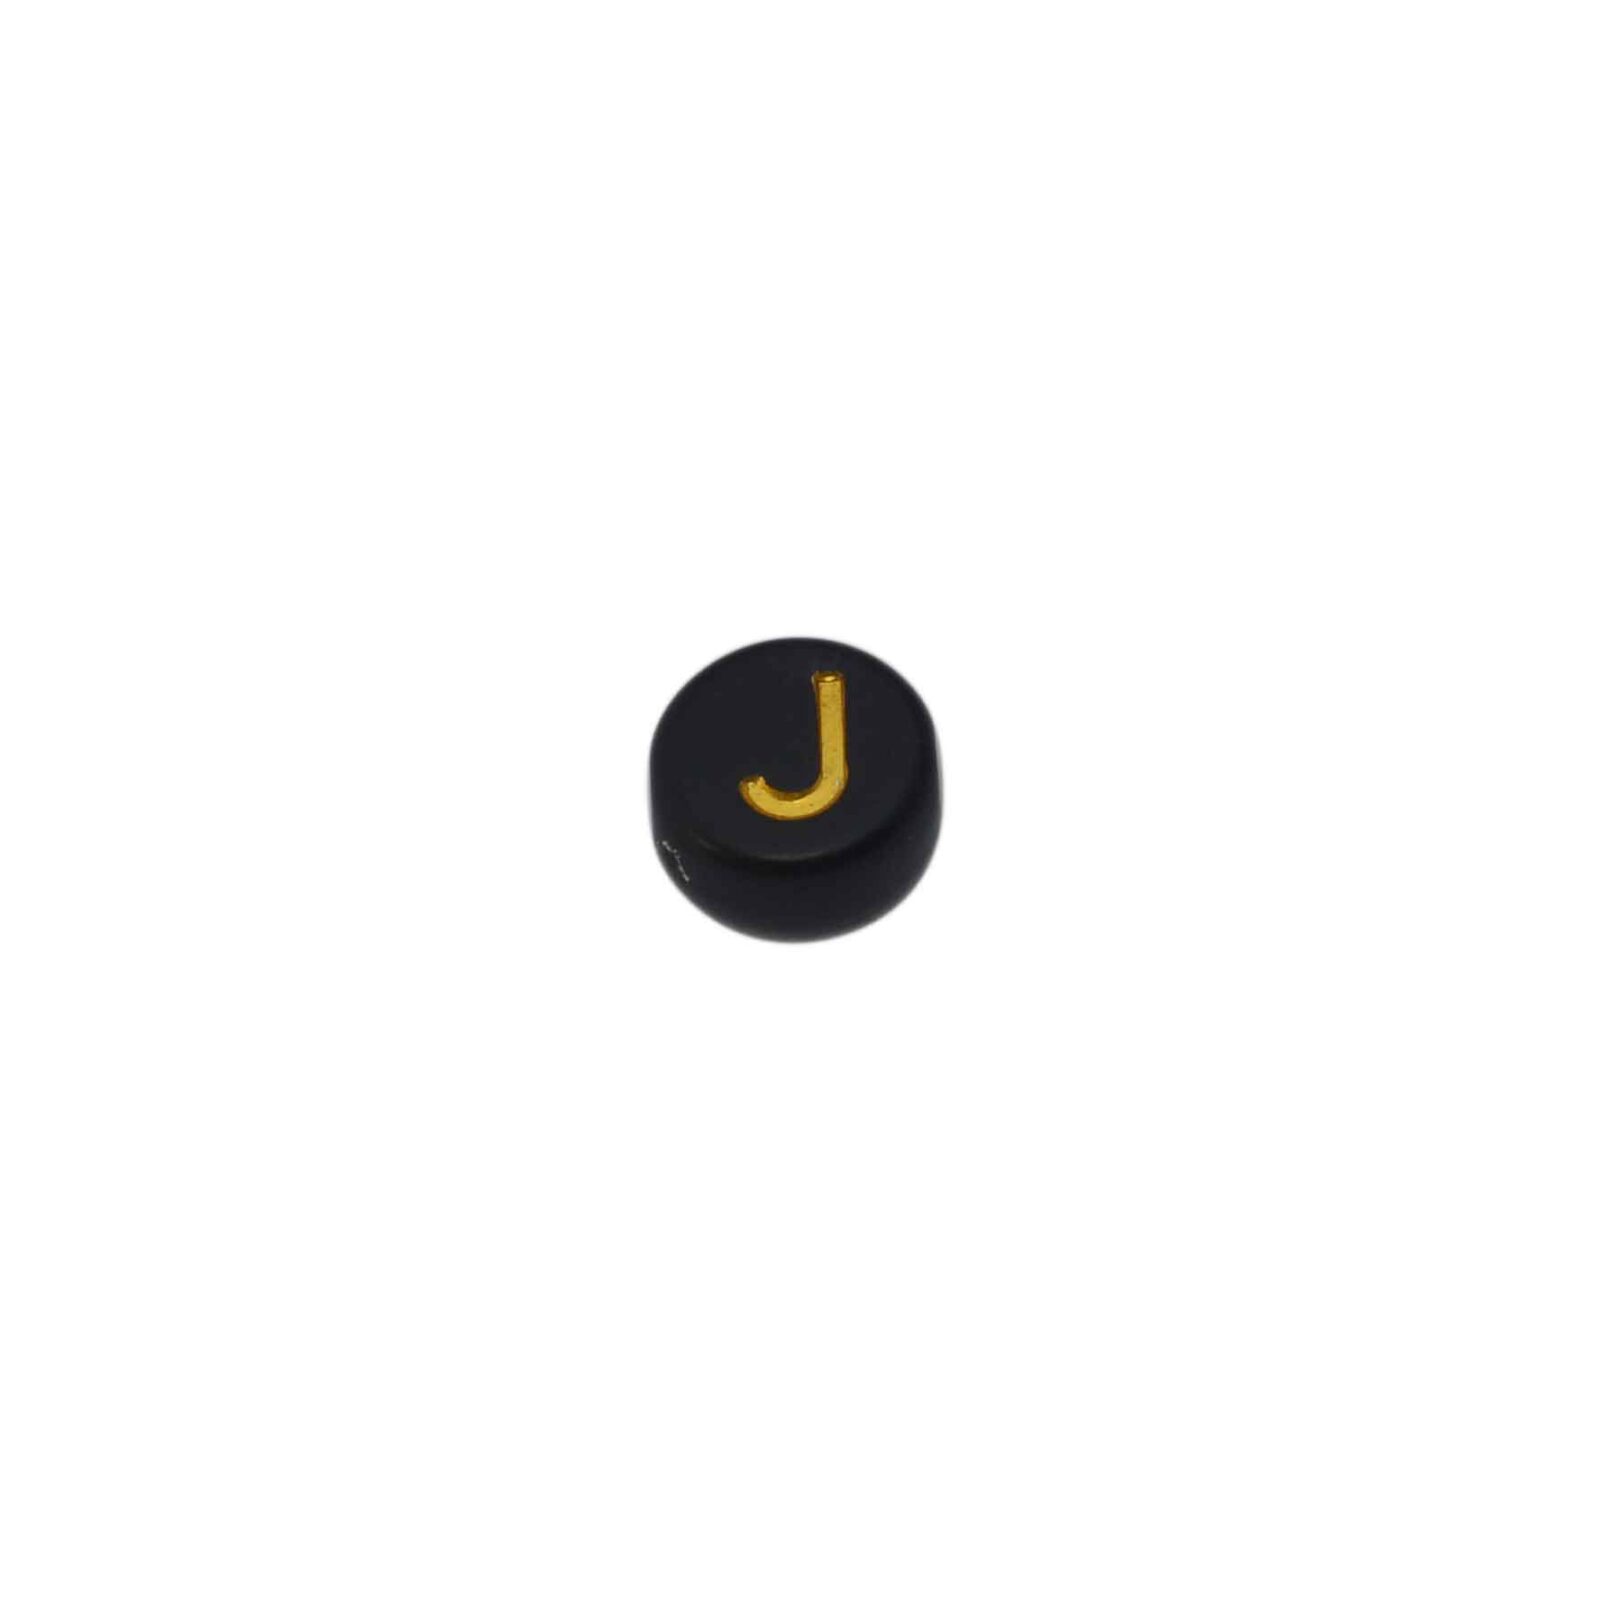 Zwarte ronde letterkraal J